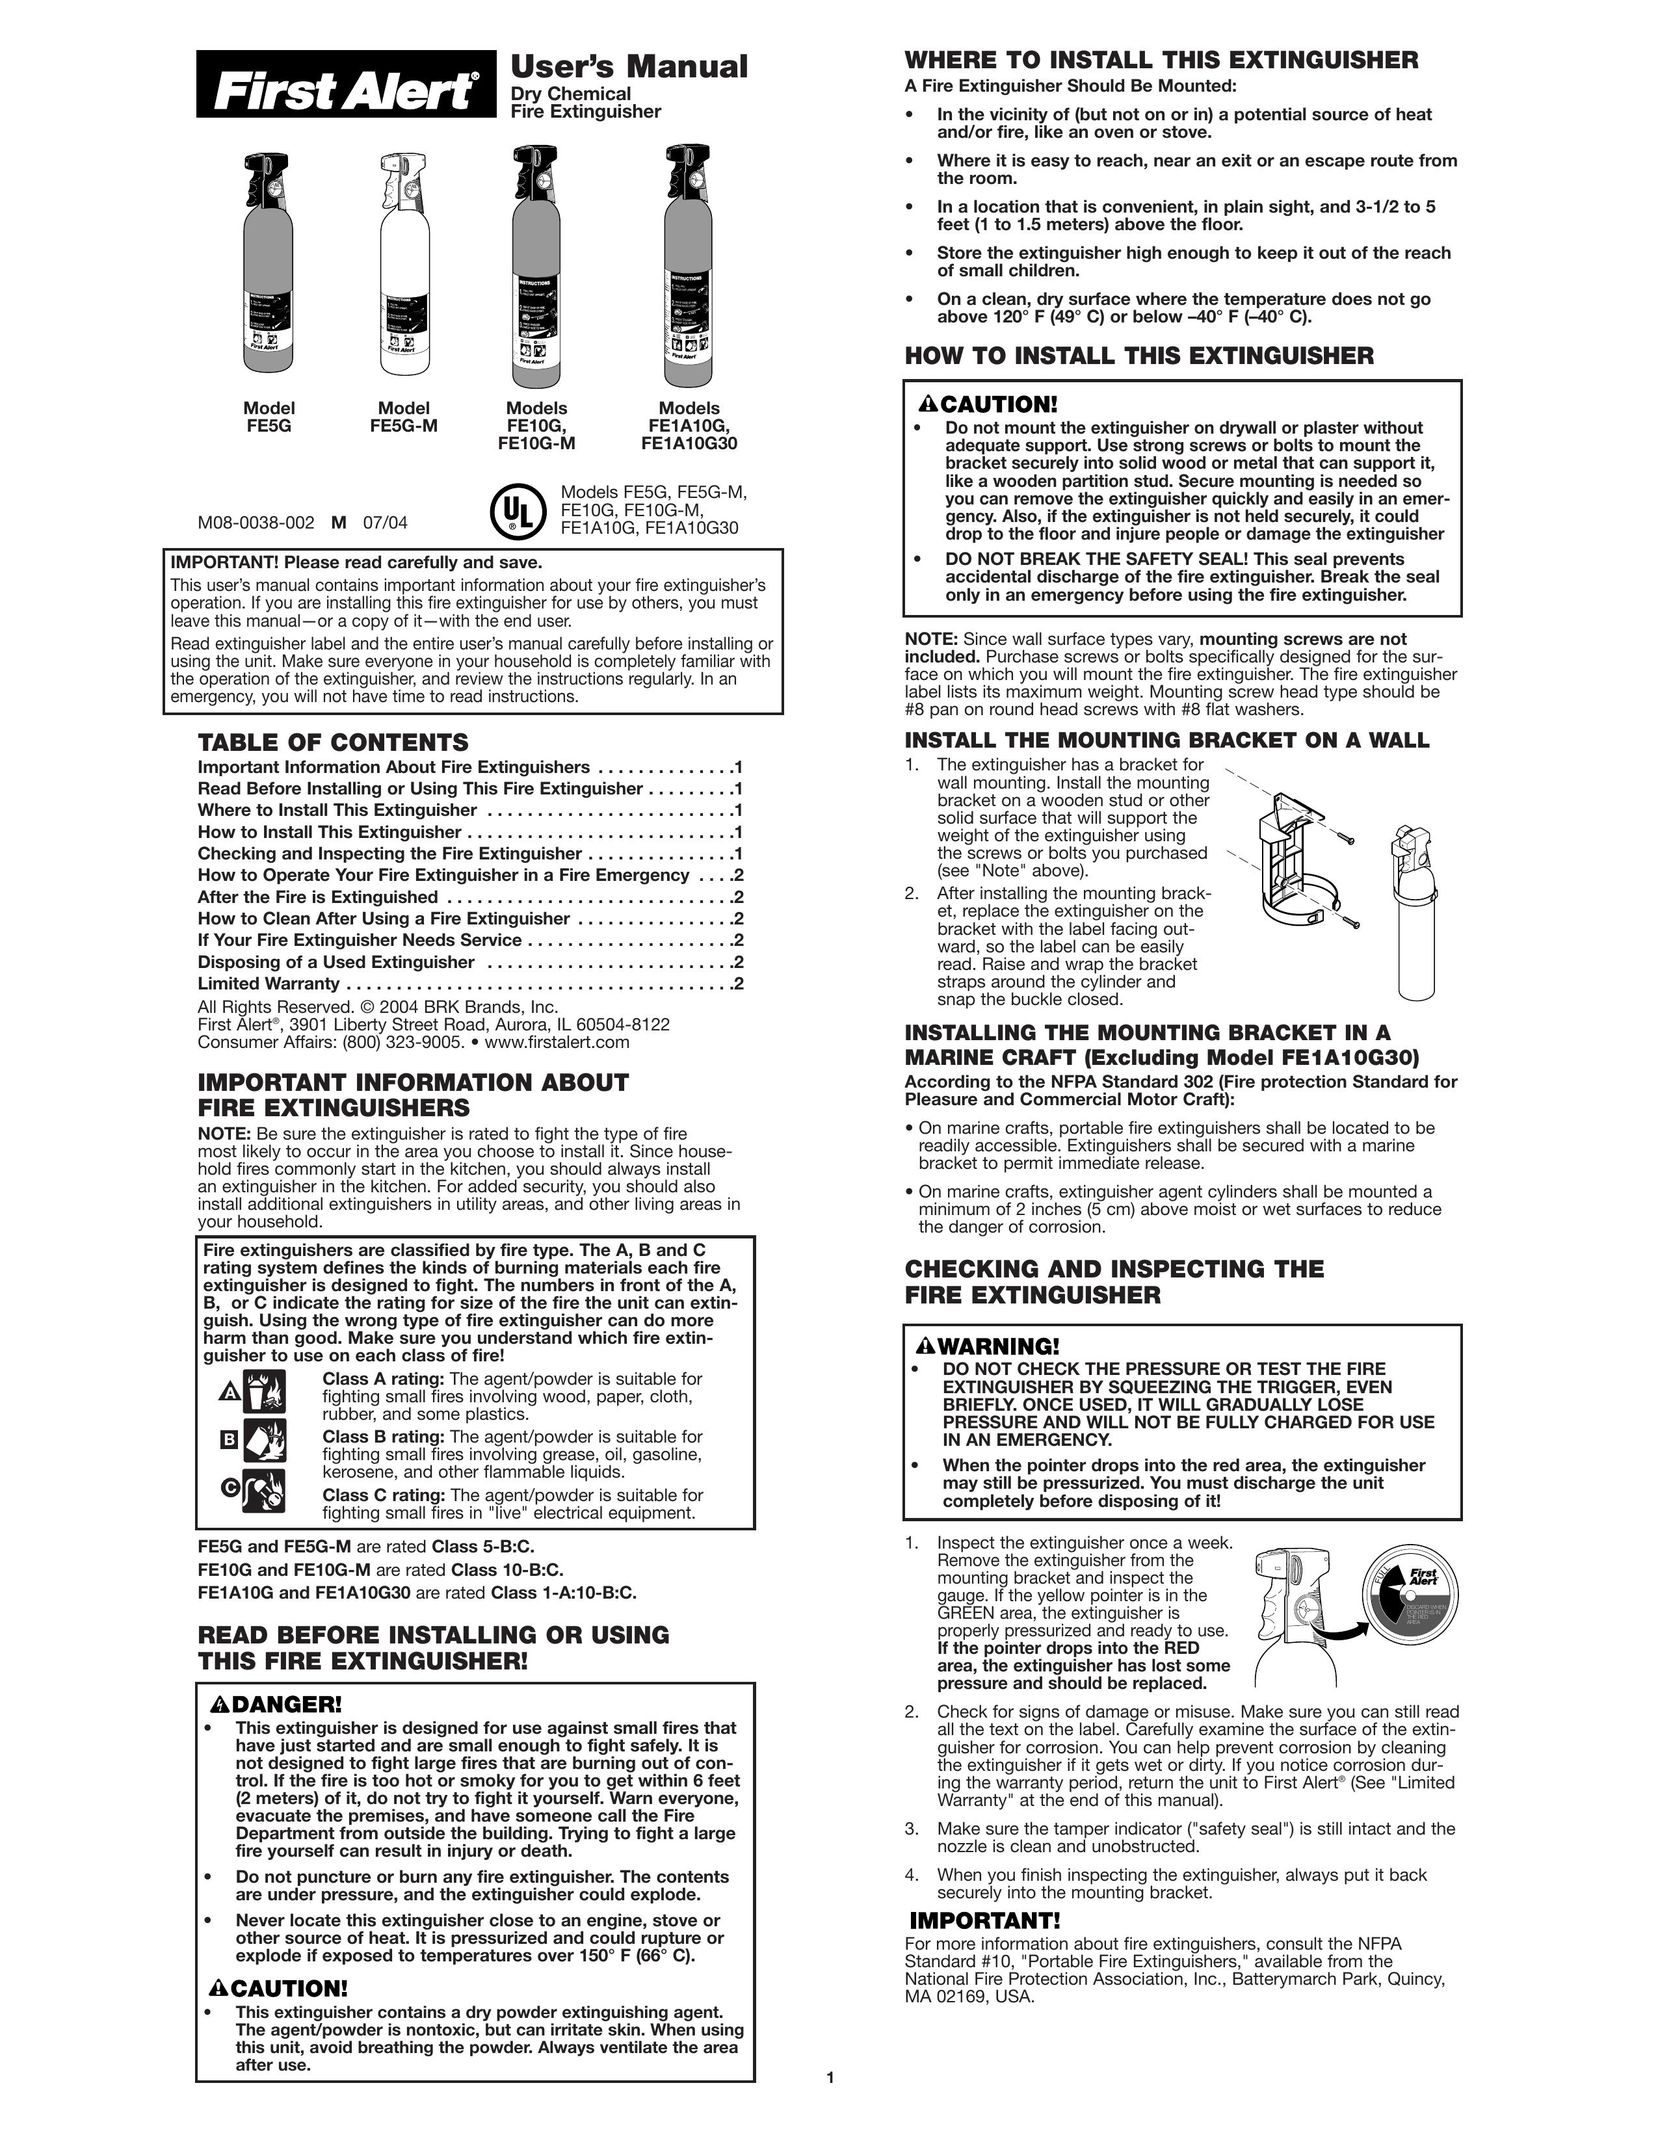 First Alert FE10G Fire Extinguisher User Manual